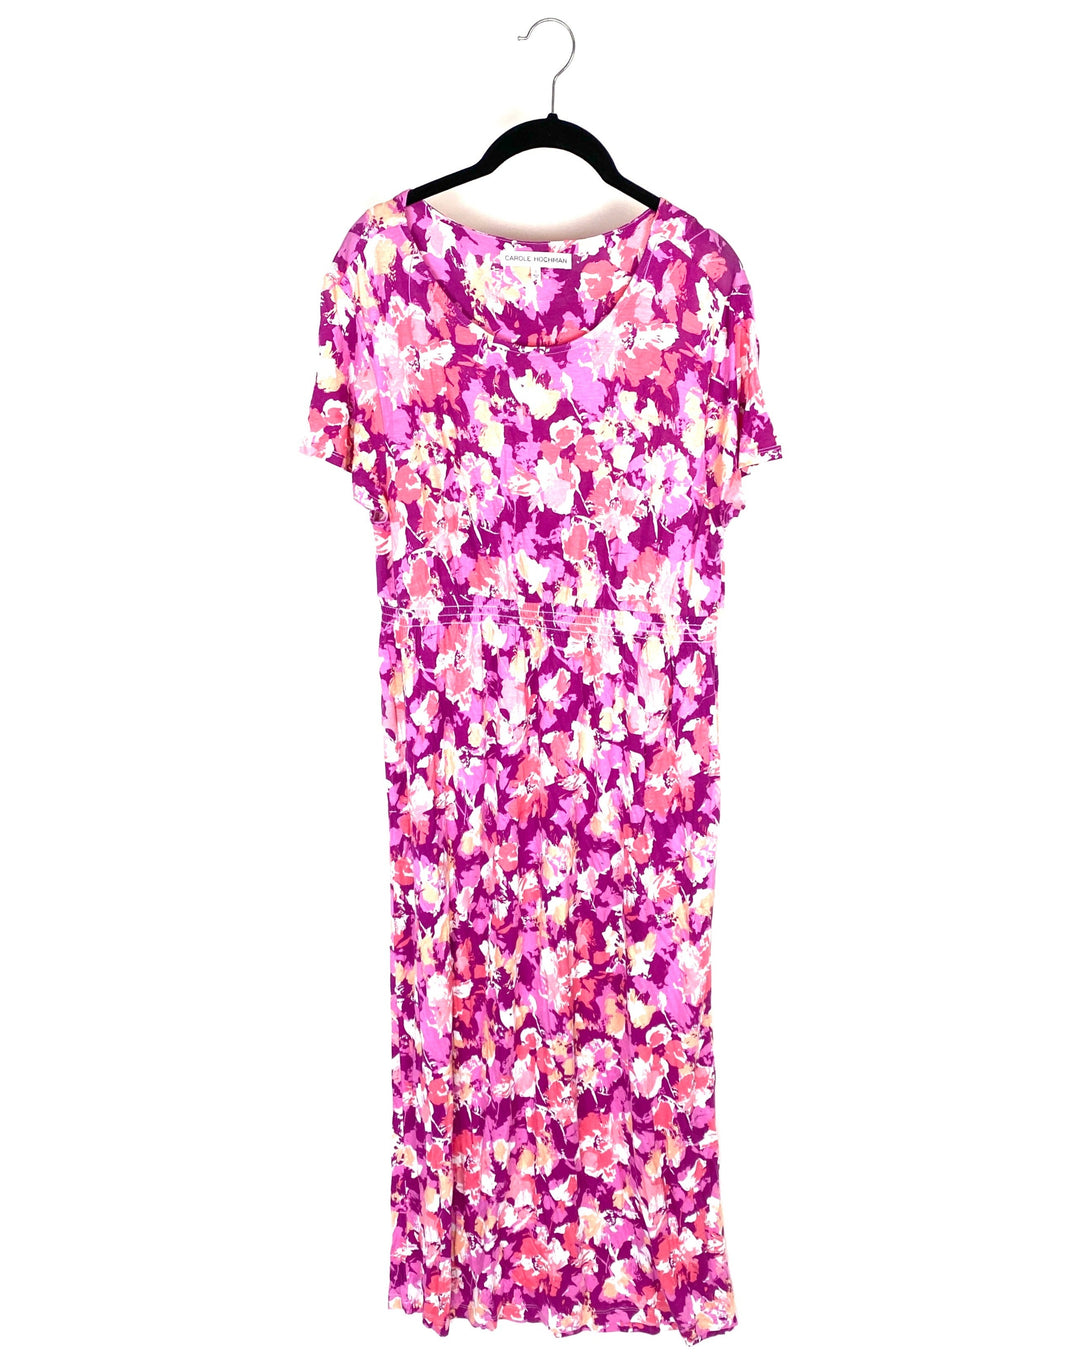 Pink Floral Print Dress - Small